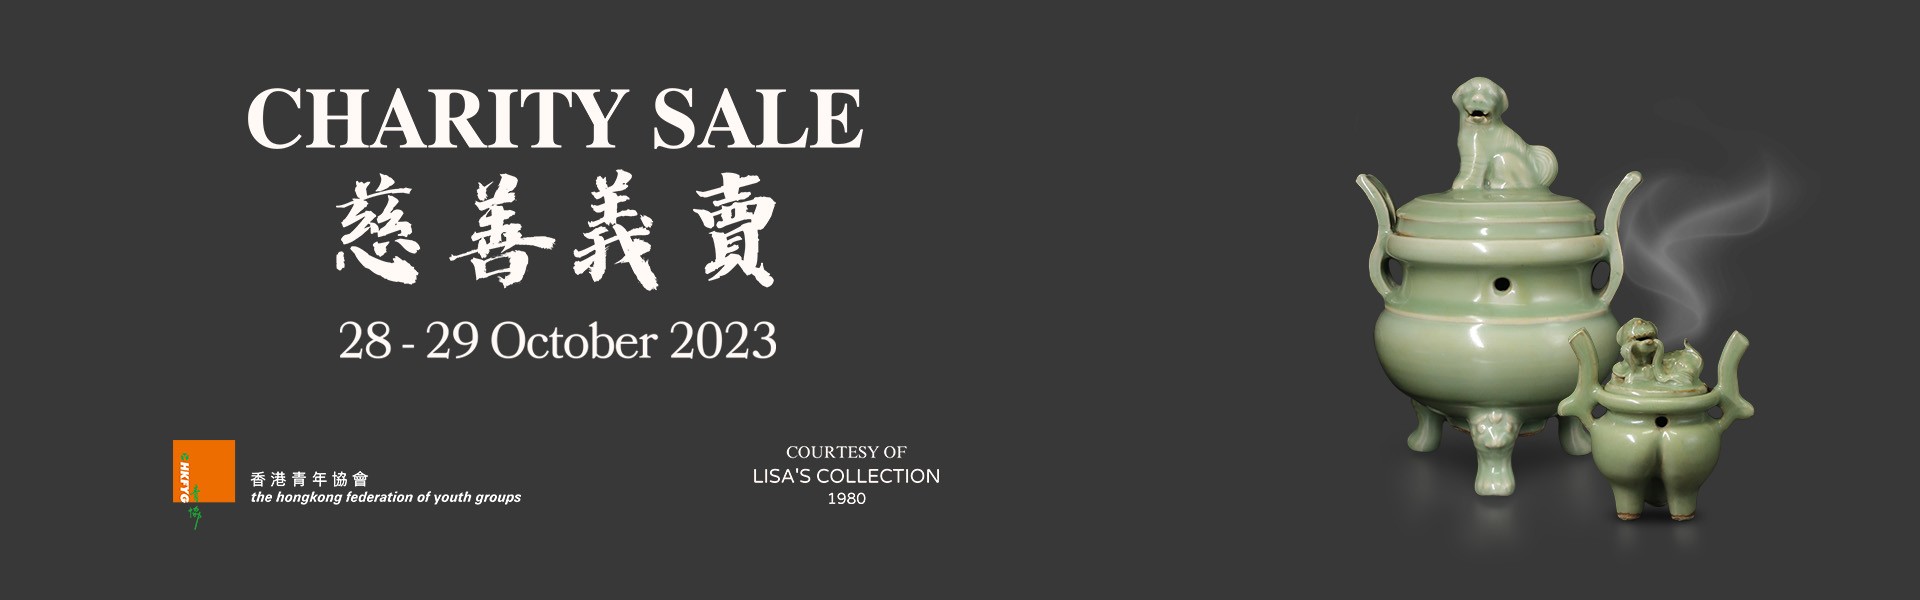 Charity Sale 2023